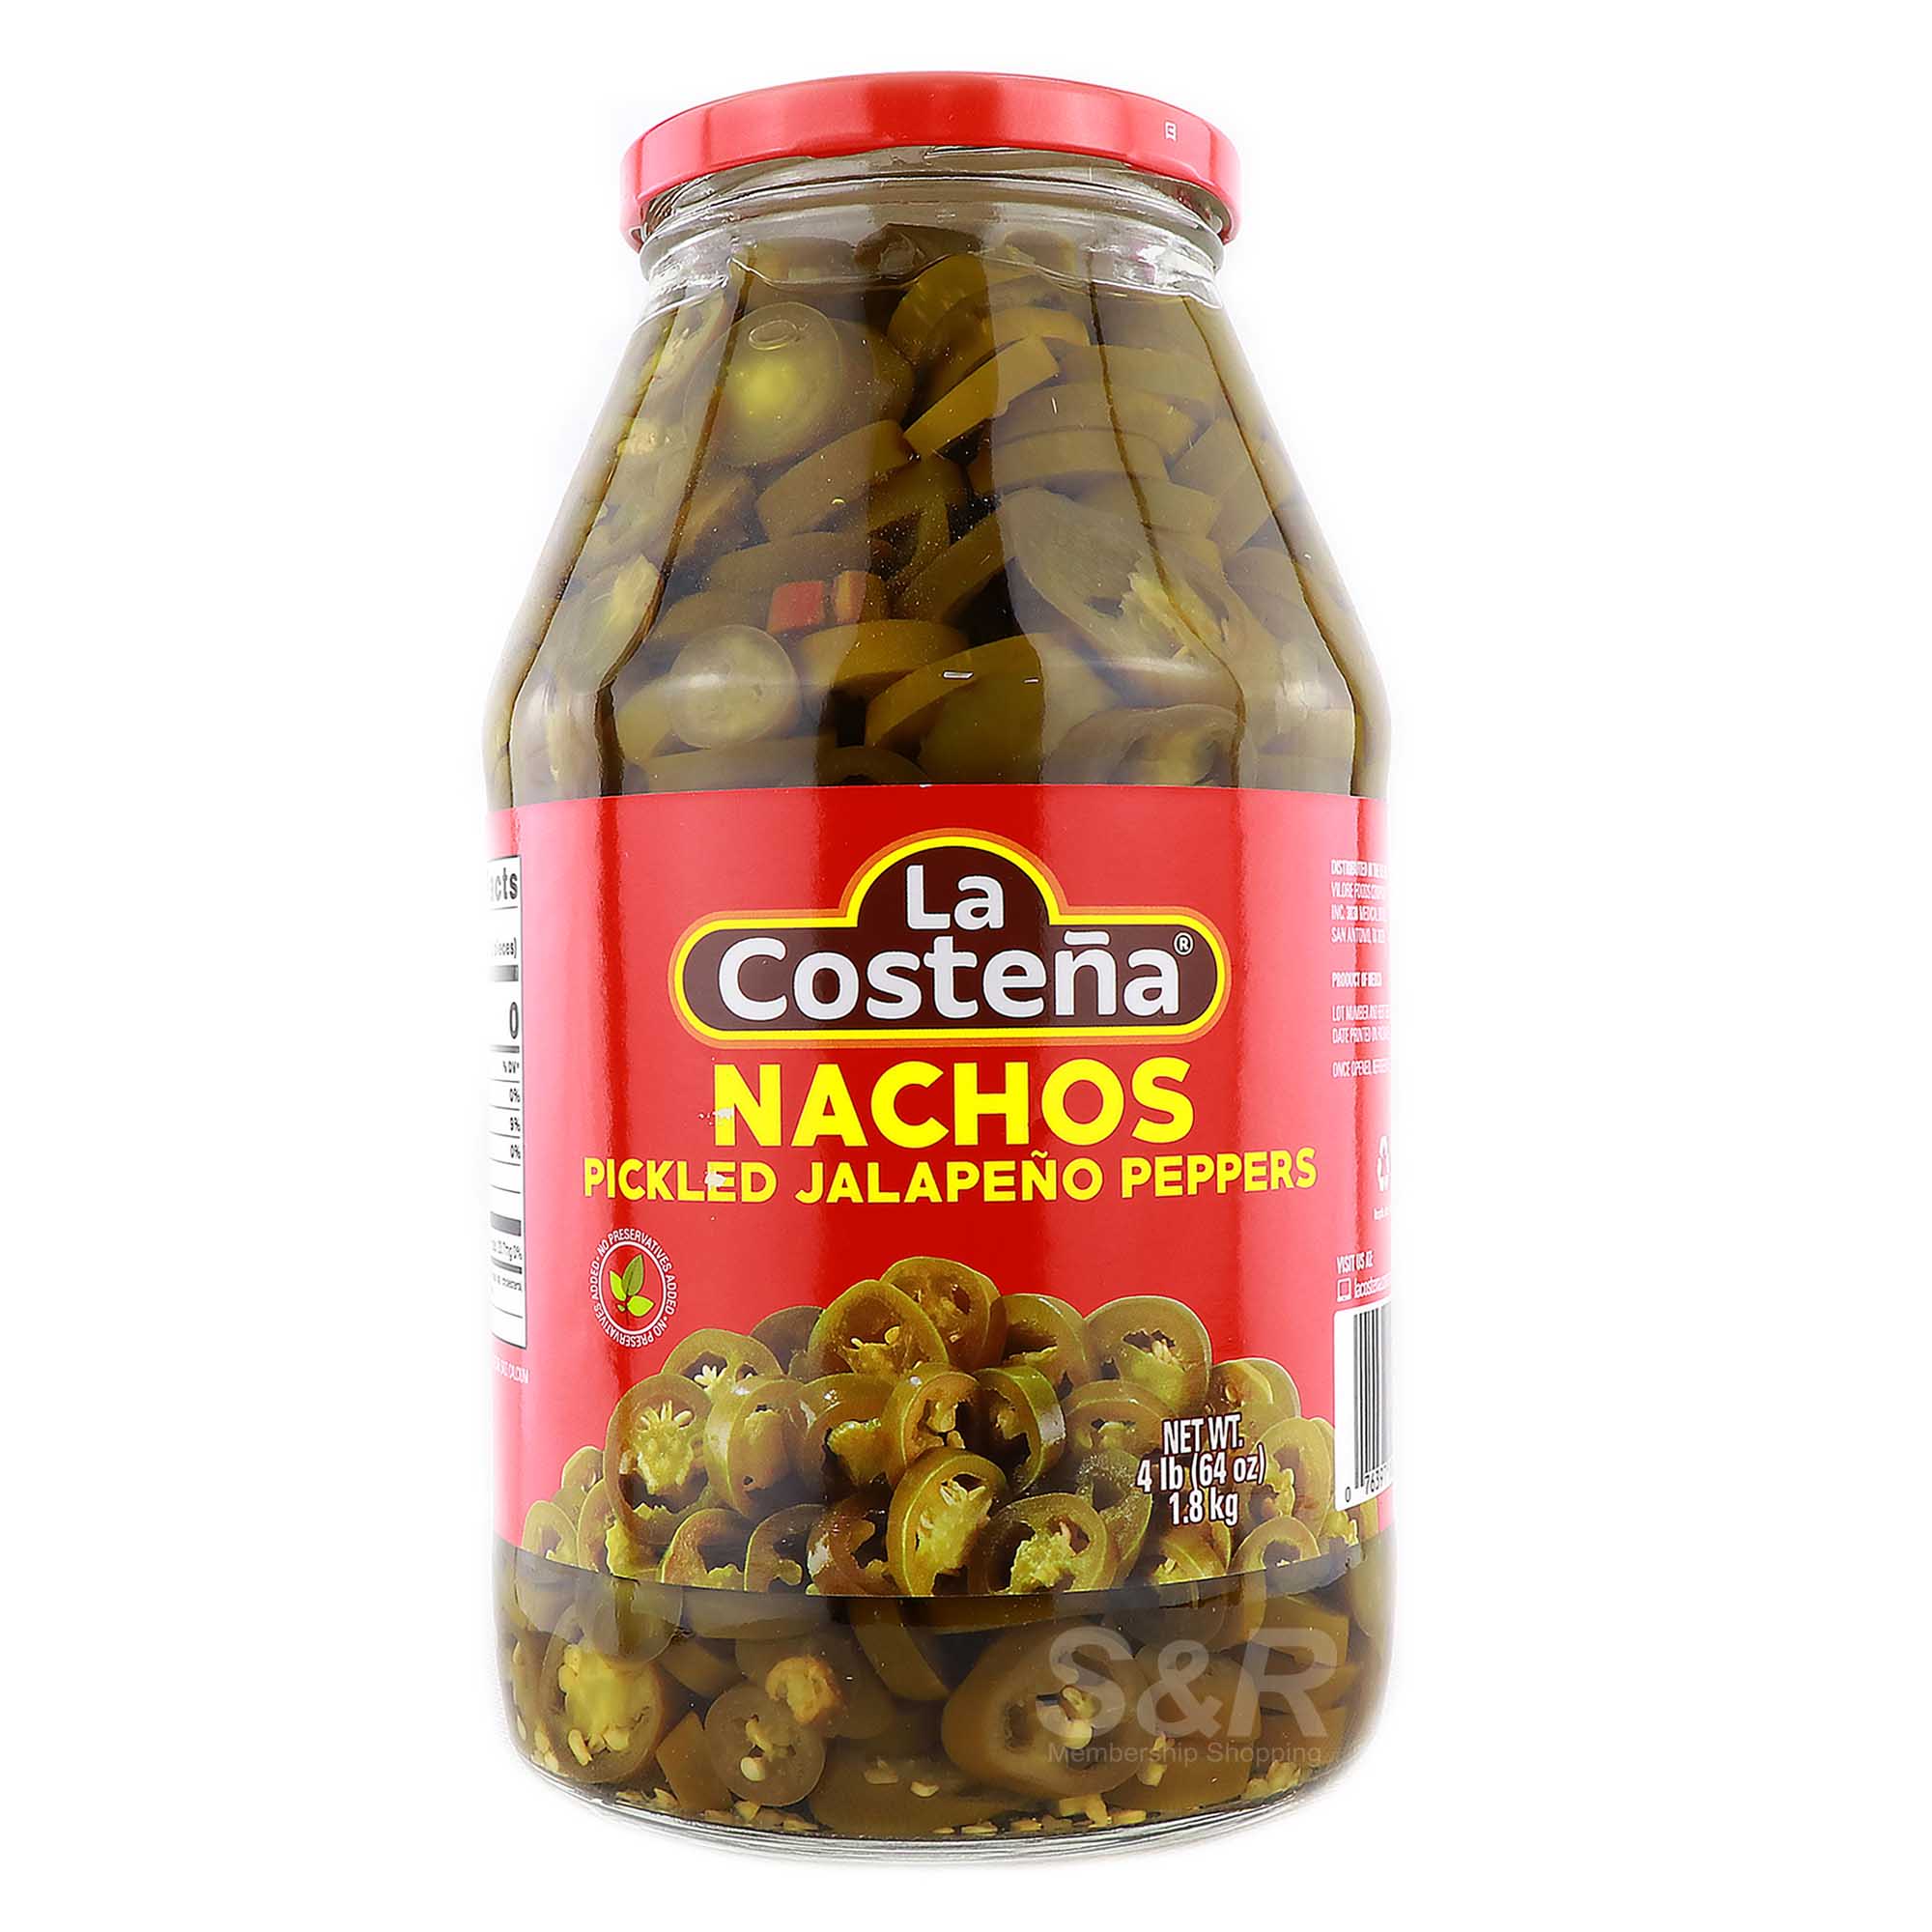 La Costena Nachos Pickled Jalapeno Peppers 1.8kg